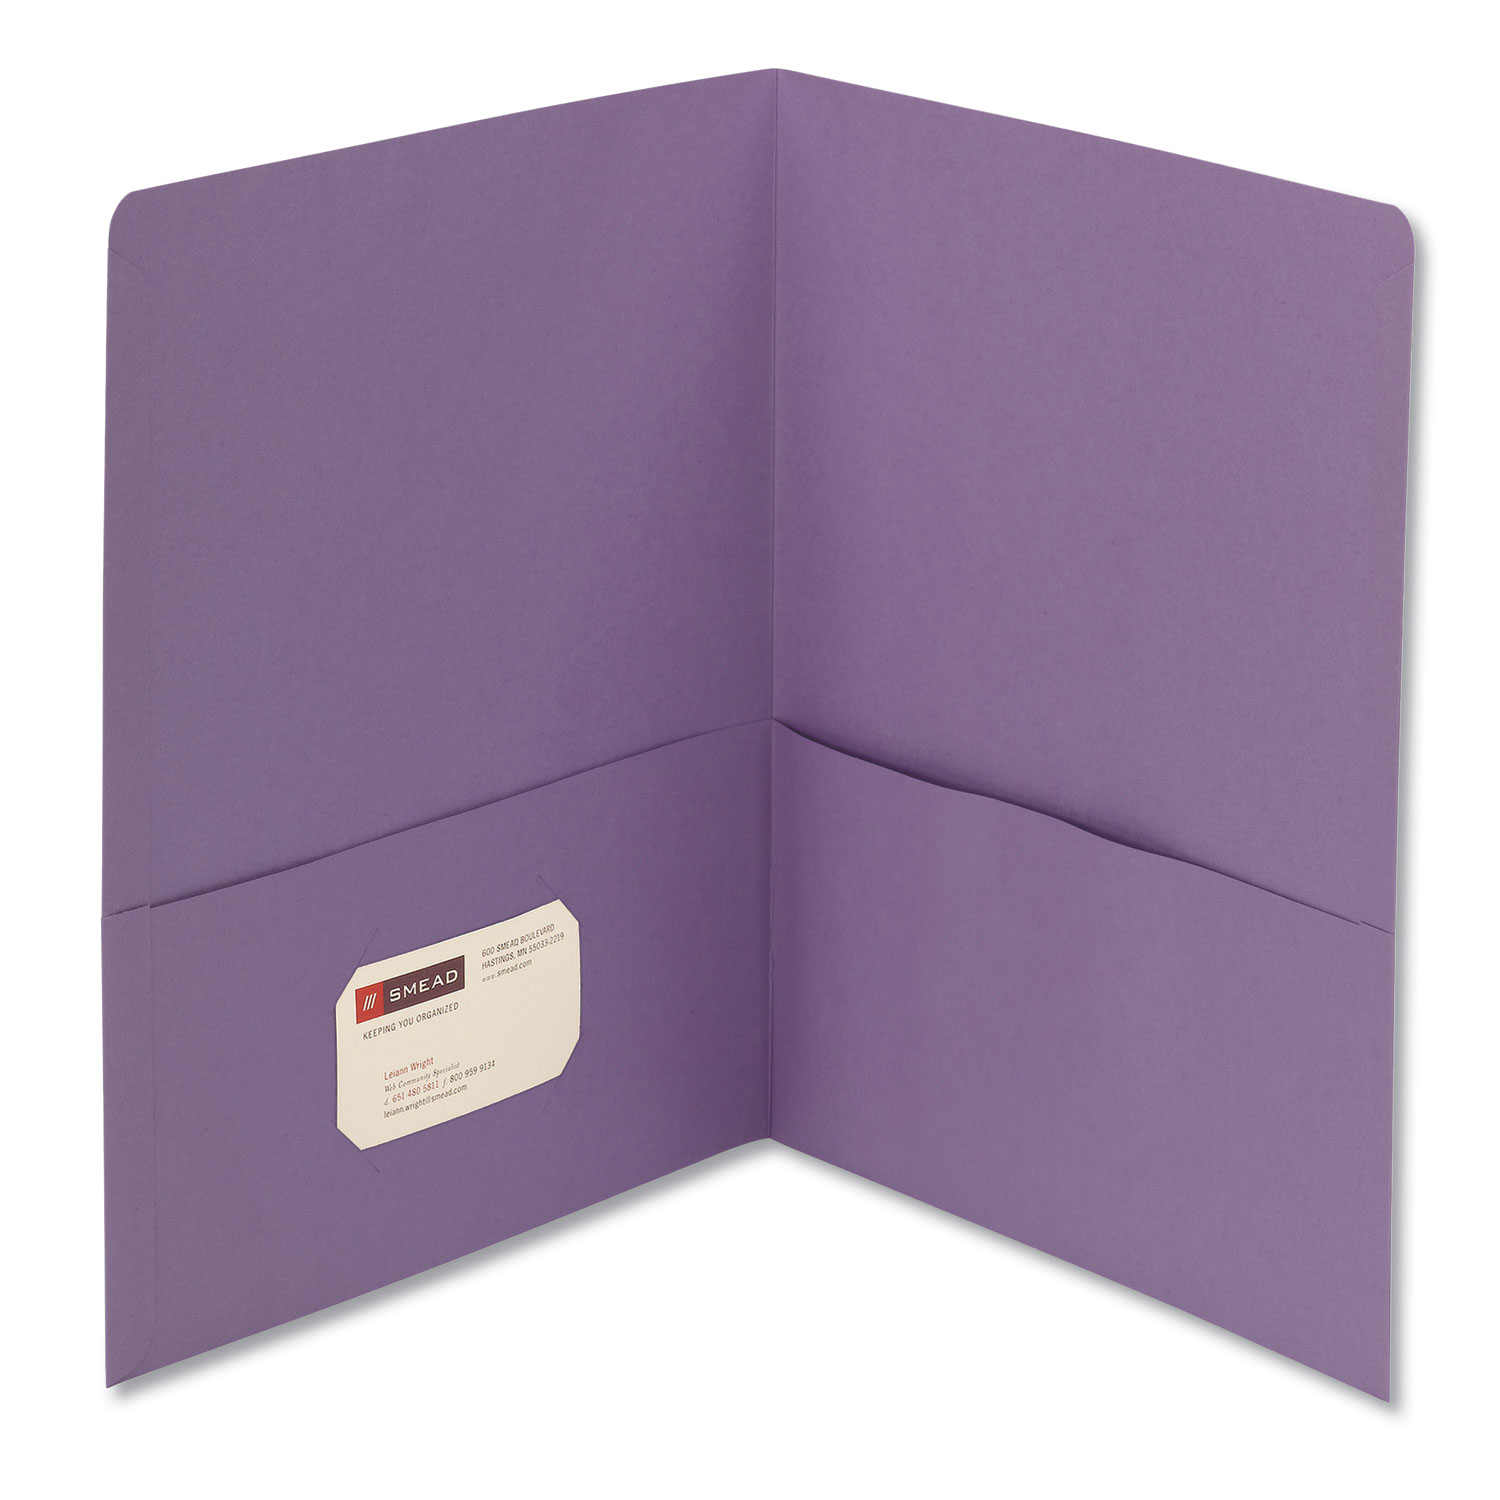  Smead 87865 Two-Pocket Folder, Textured Paper, Lavender, 25/Box (SMD87865) 